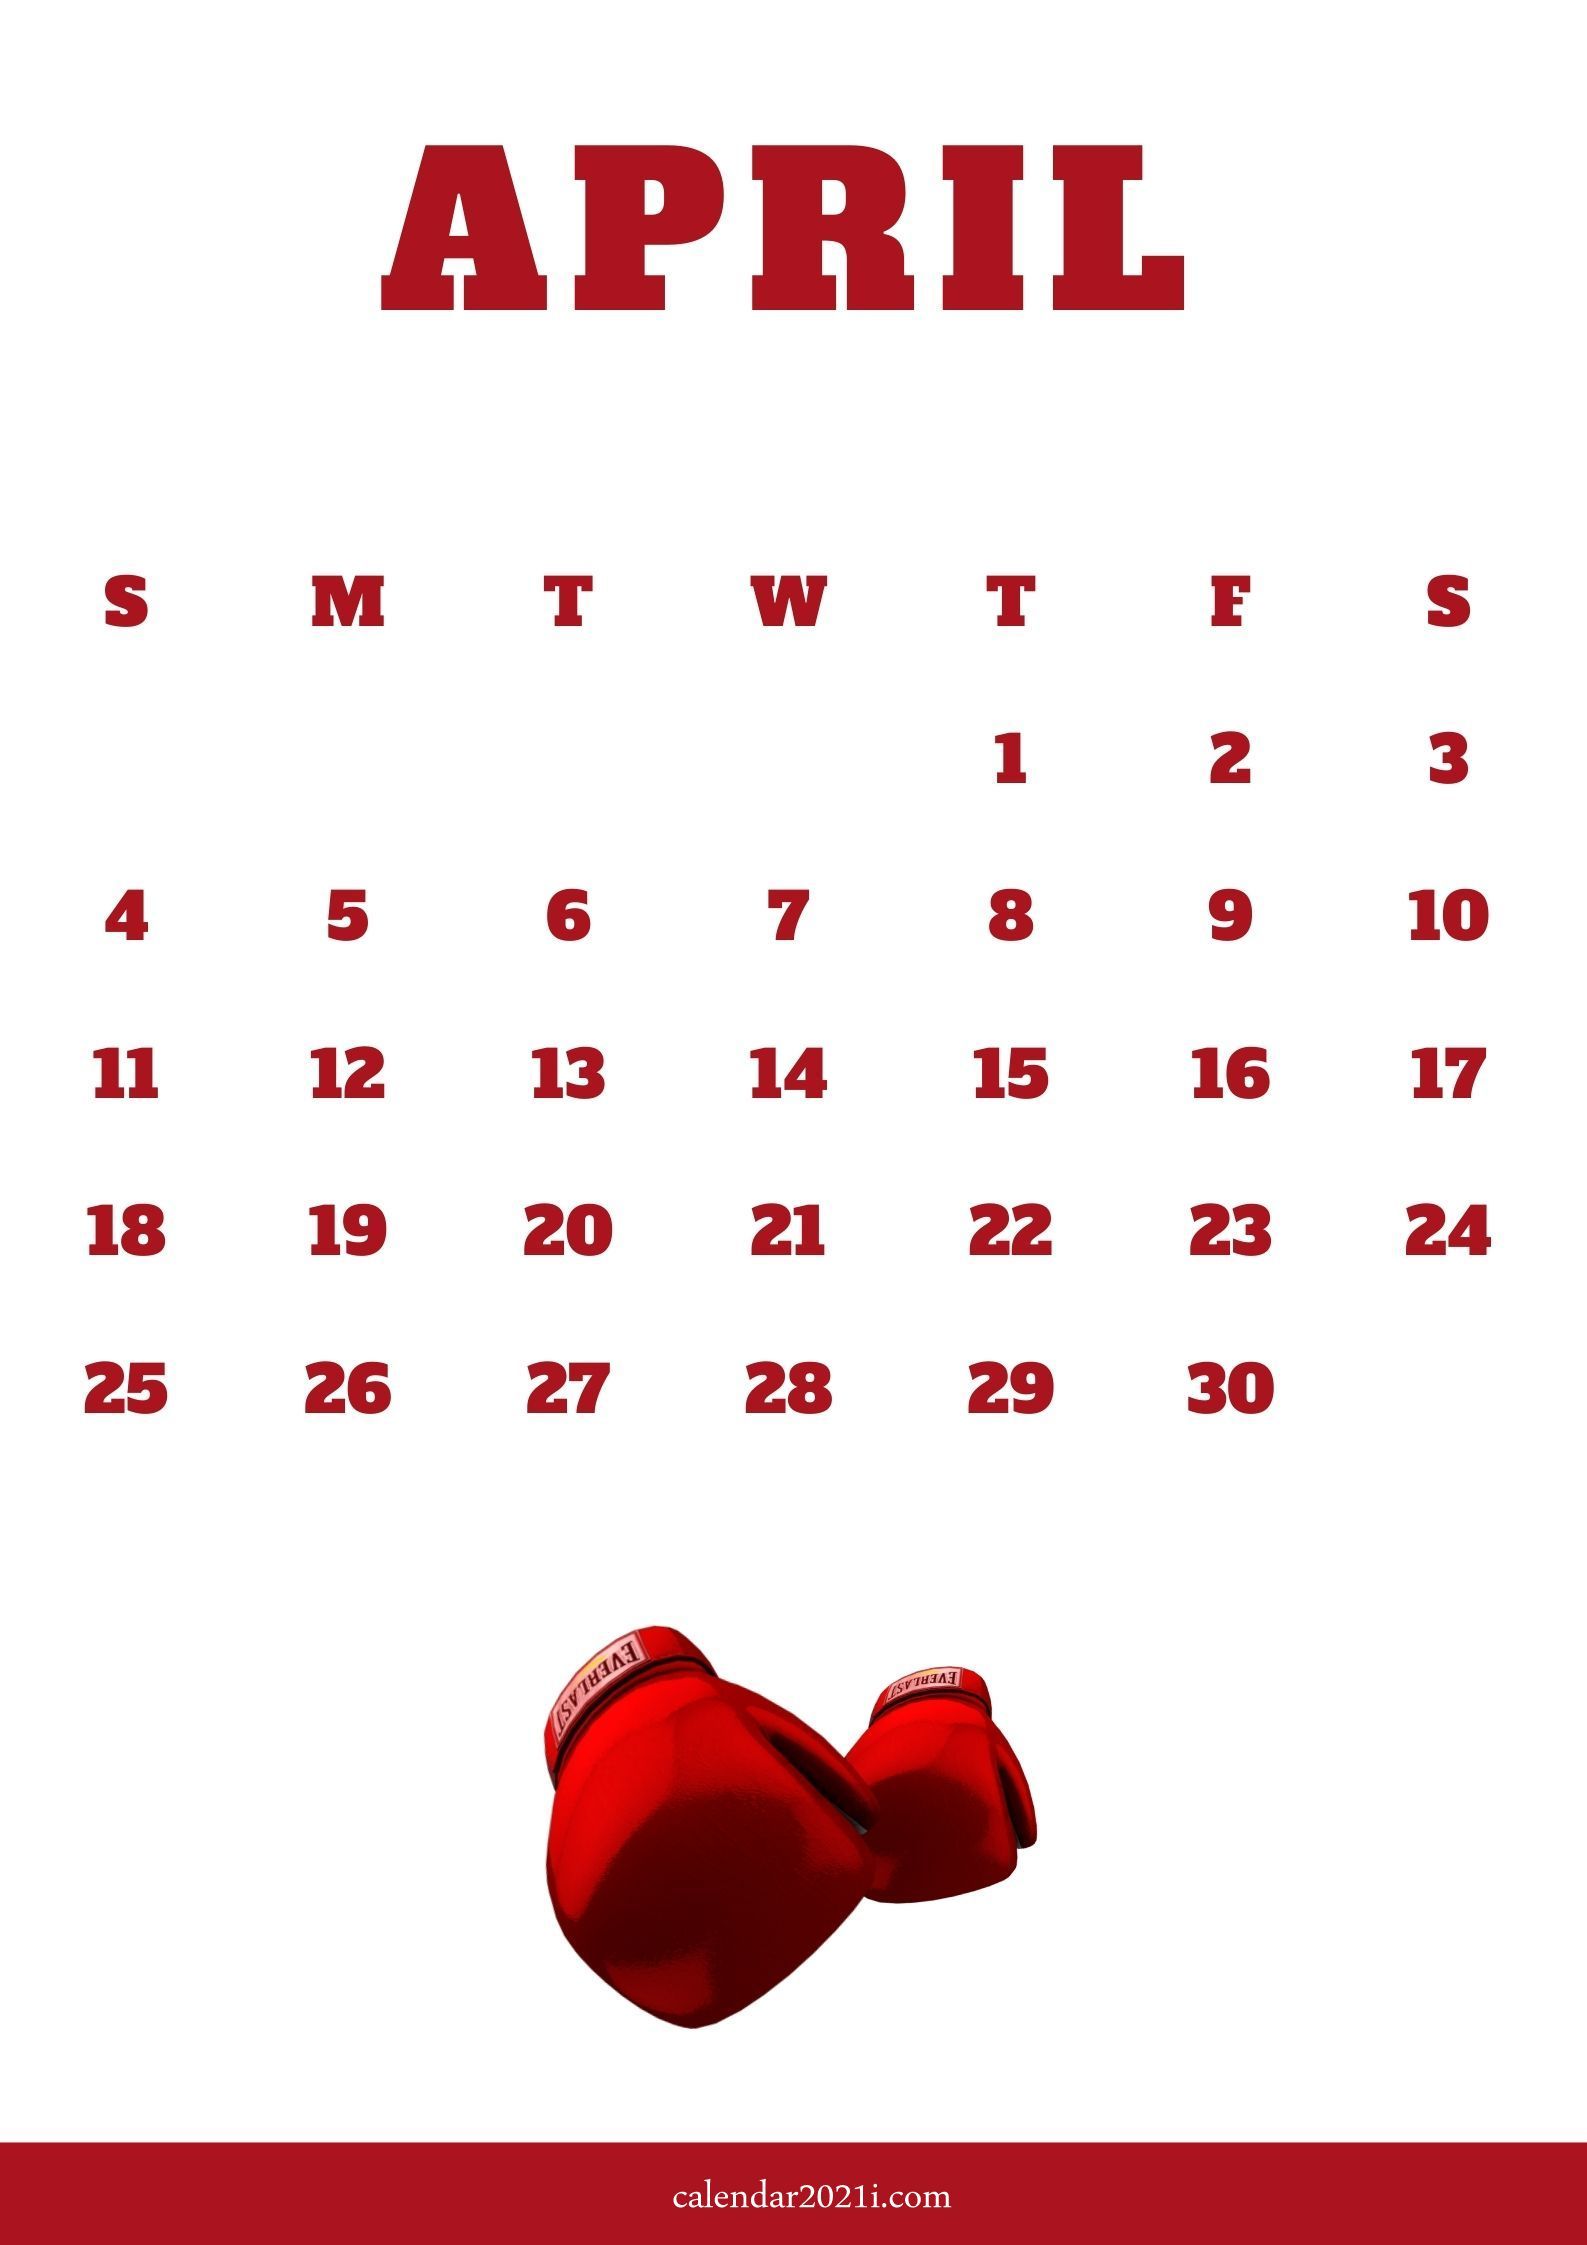 iPhone April 2021 Calendar Wallpaper Free Download